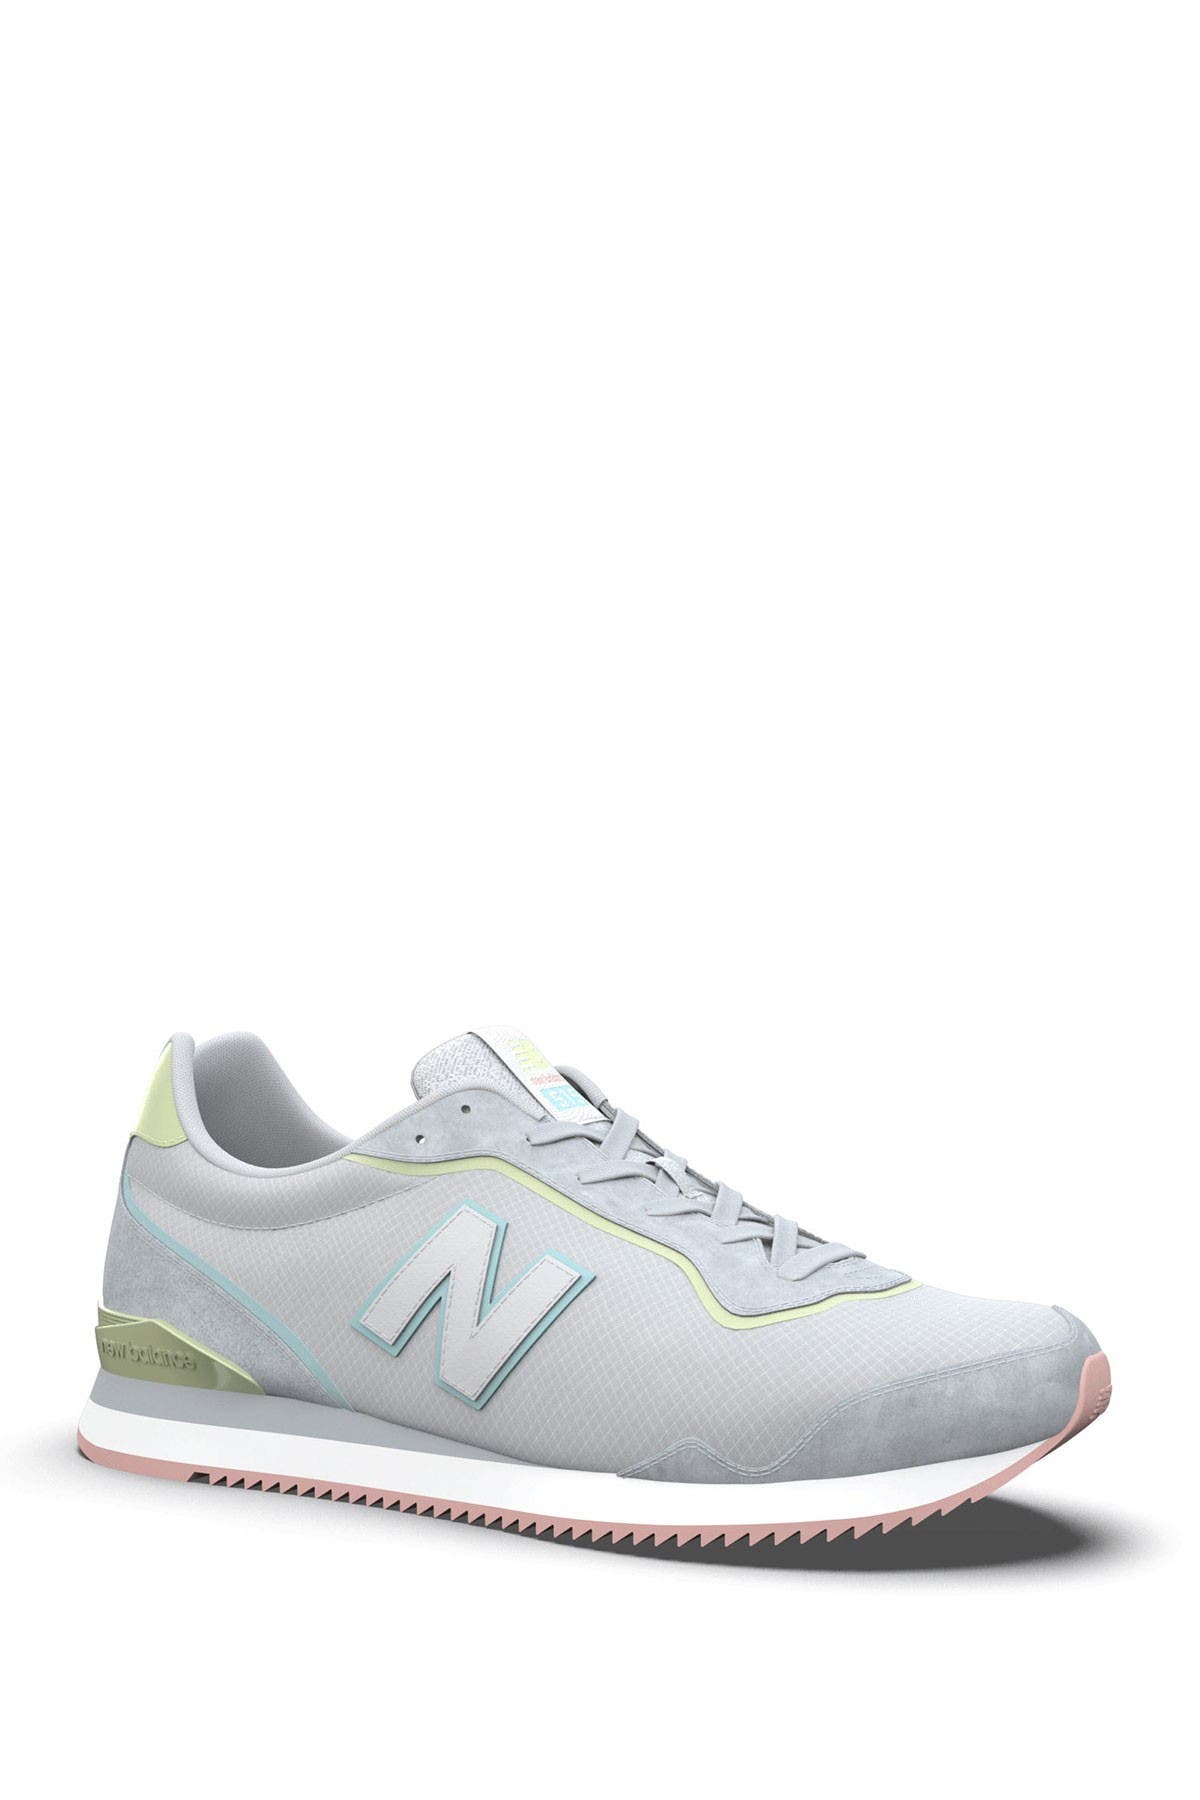 New Balance Sola Sleek Classic Running Shoe In Grey